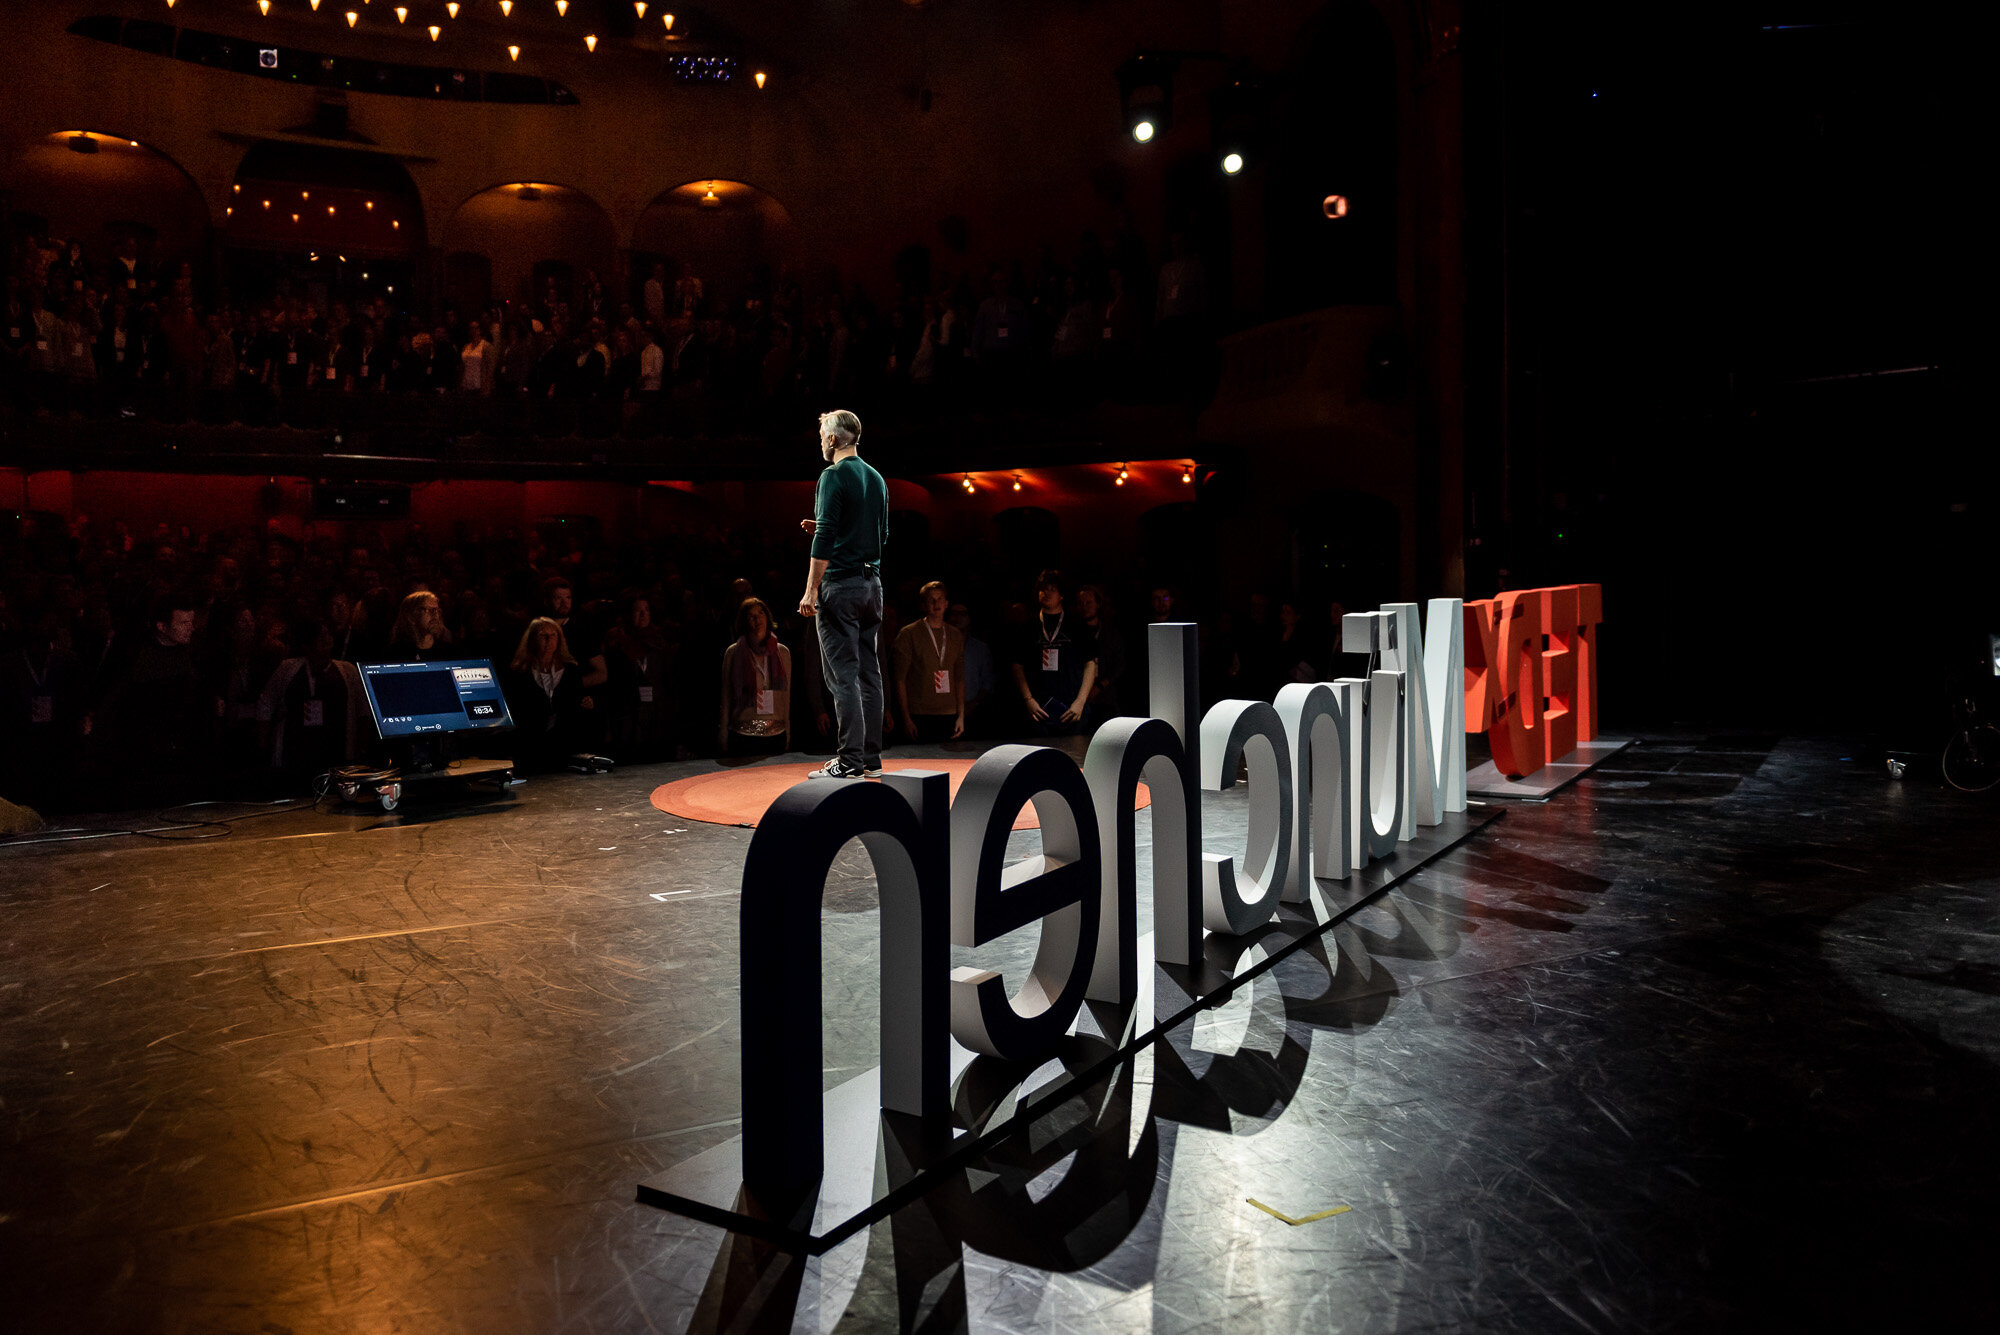 TEDX_2019-191110-097.jpg